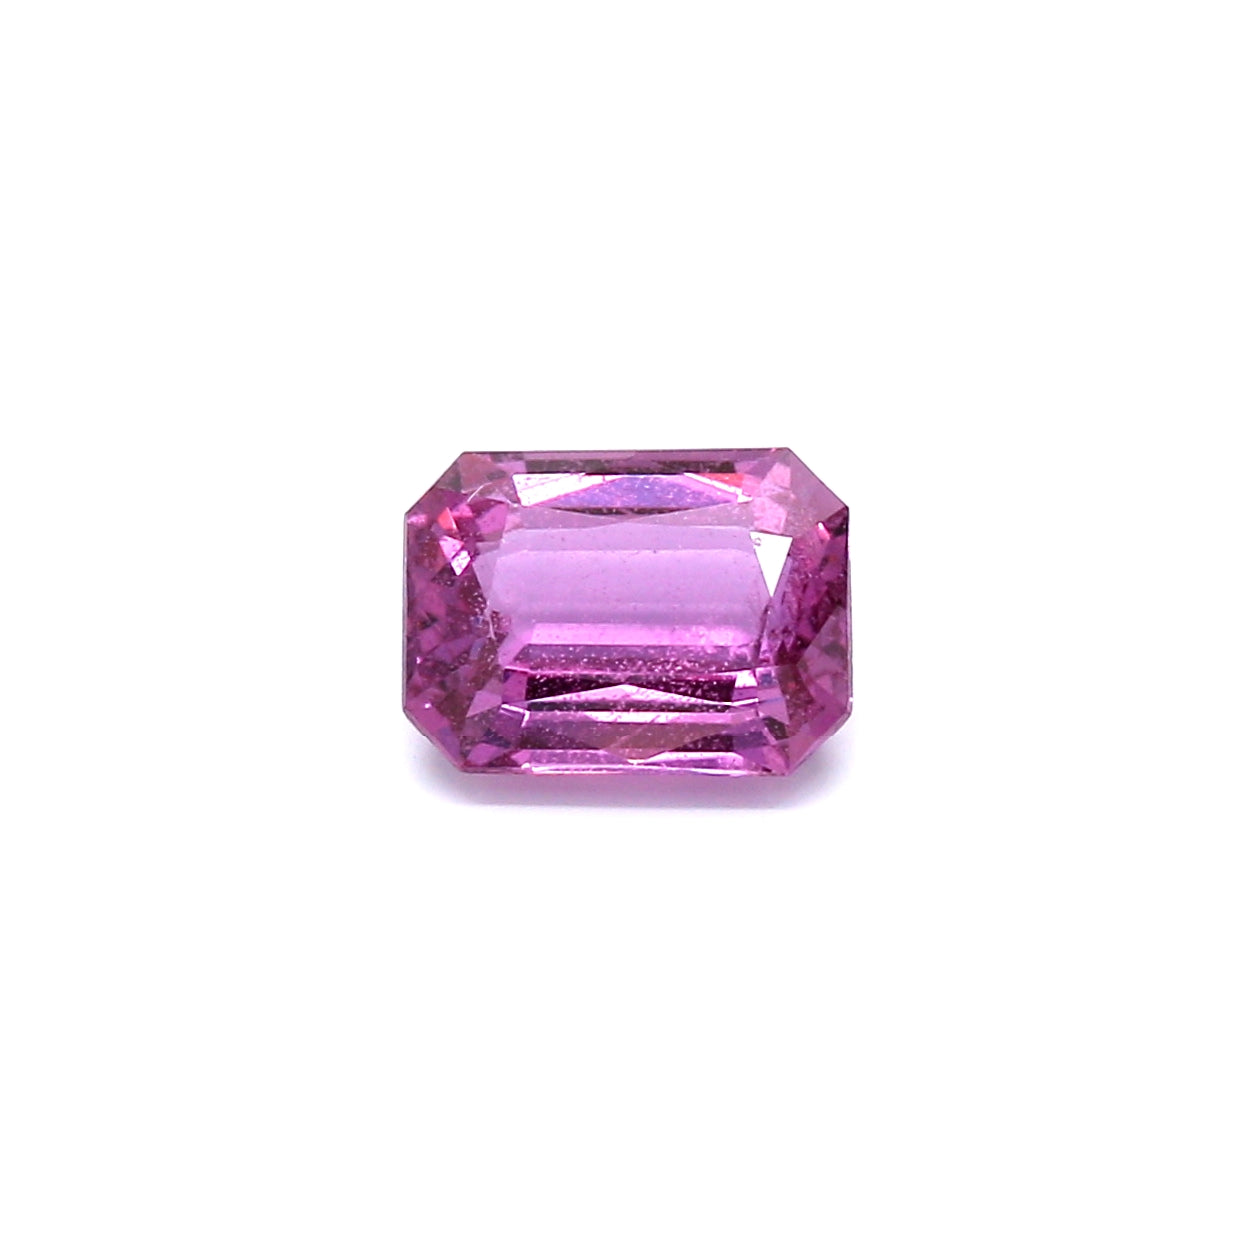 1.65ct Purplish Pink, Octagon Sapphire, Heated, Madagascar - 7.84 x 5.87 x 3.26mm